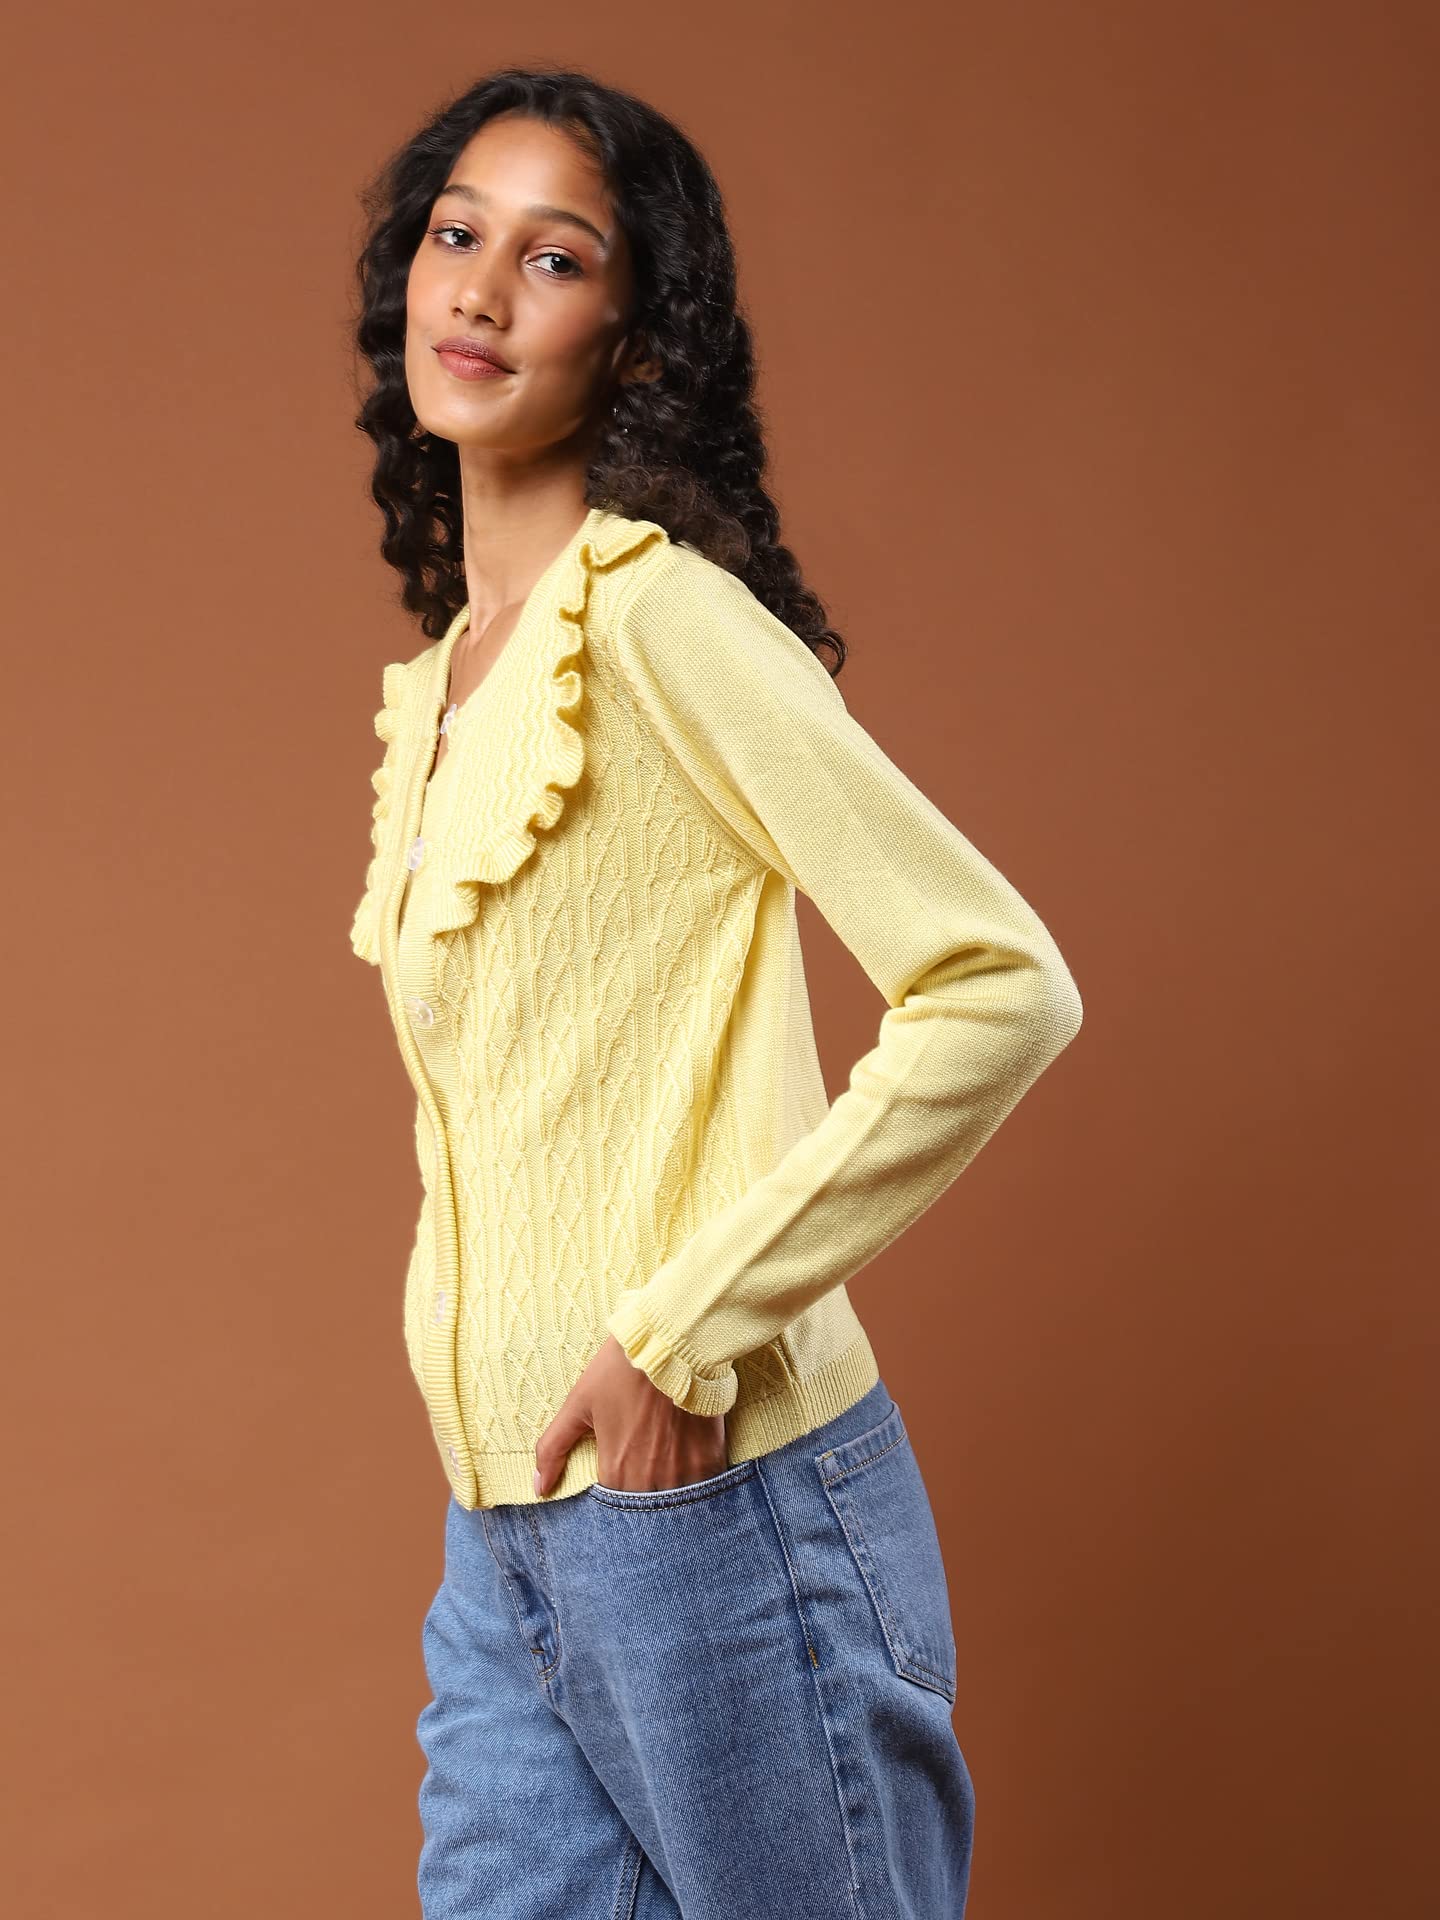 Aarke Ritu Kumar Women's Acrylic Round Neck Sweater SWTHAJ02N30127713-LIME-M Green